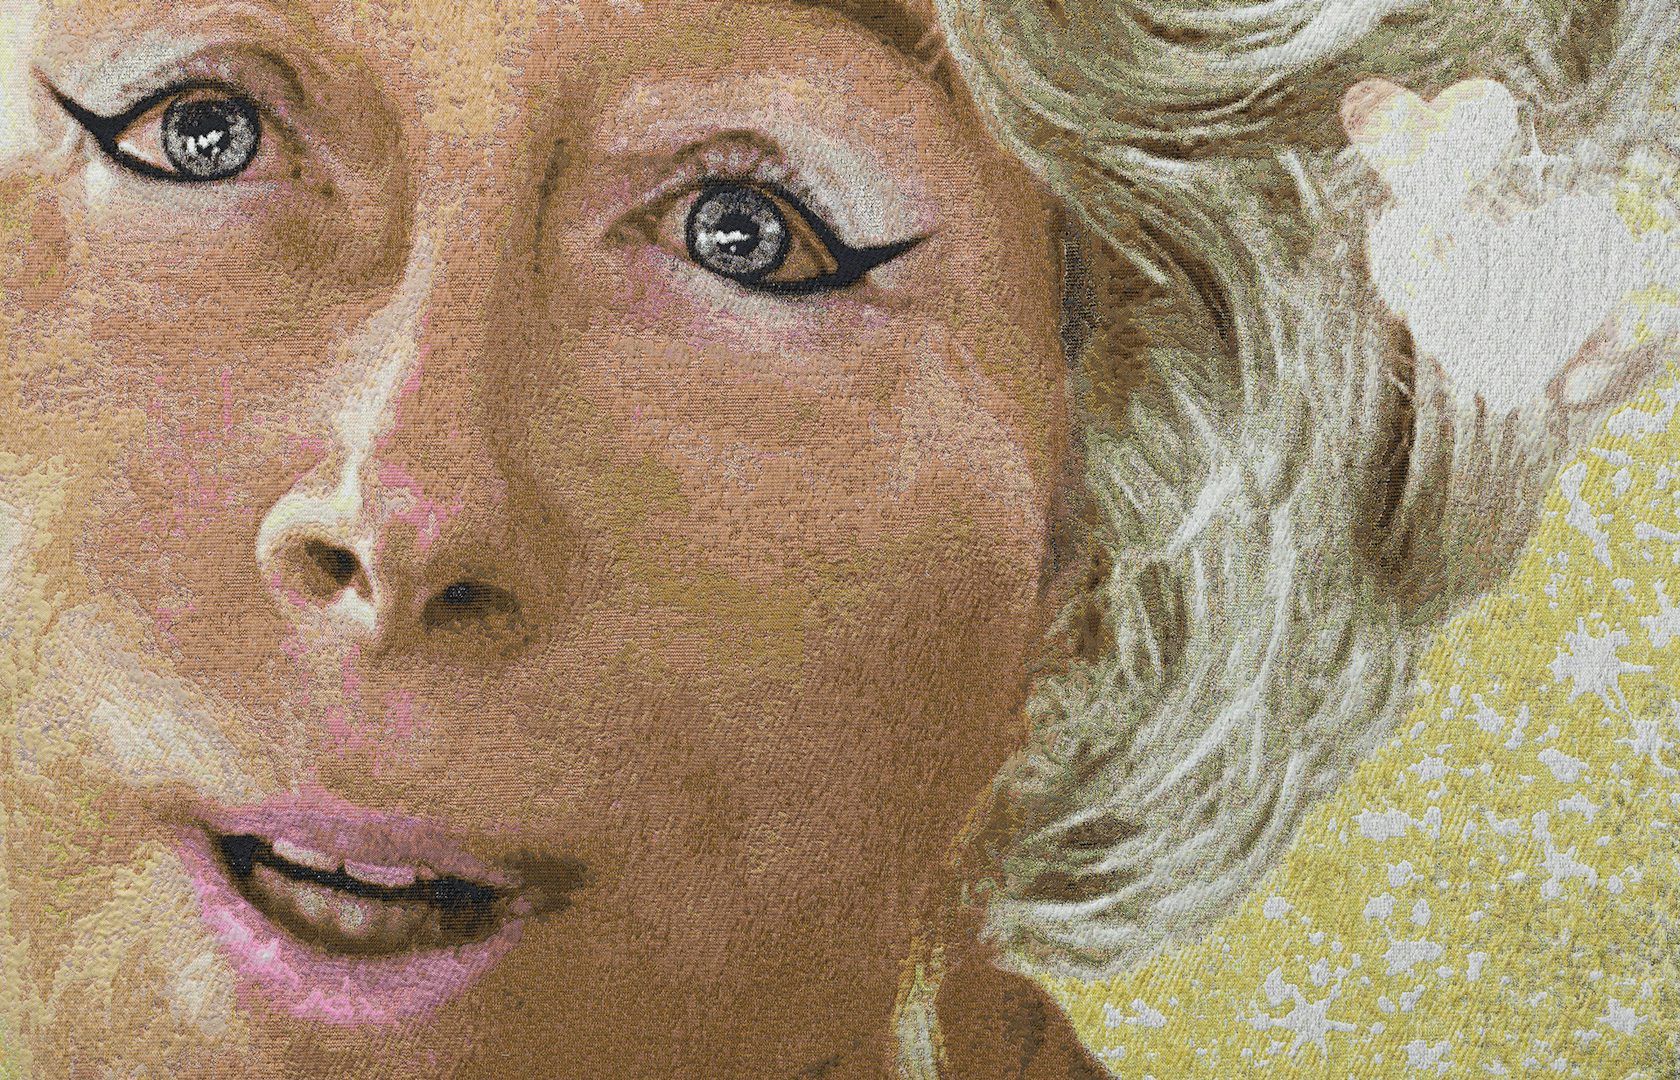 Untitled: Artist Cindy Sherman's Record-breaking Film Stills